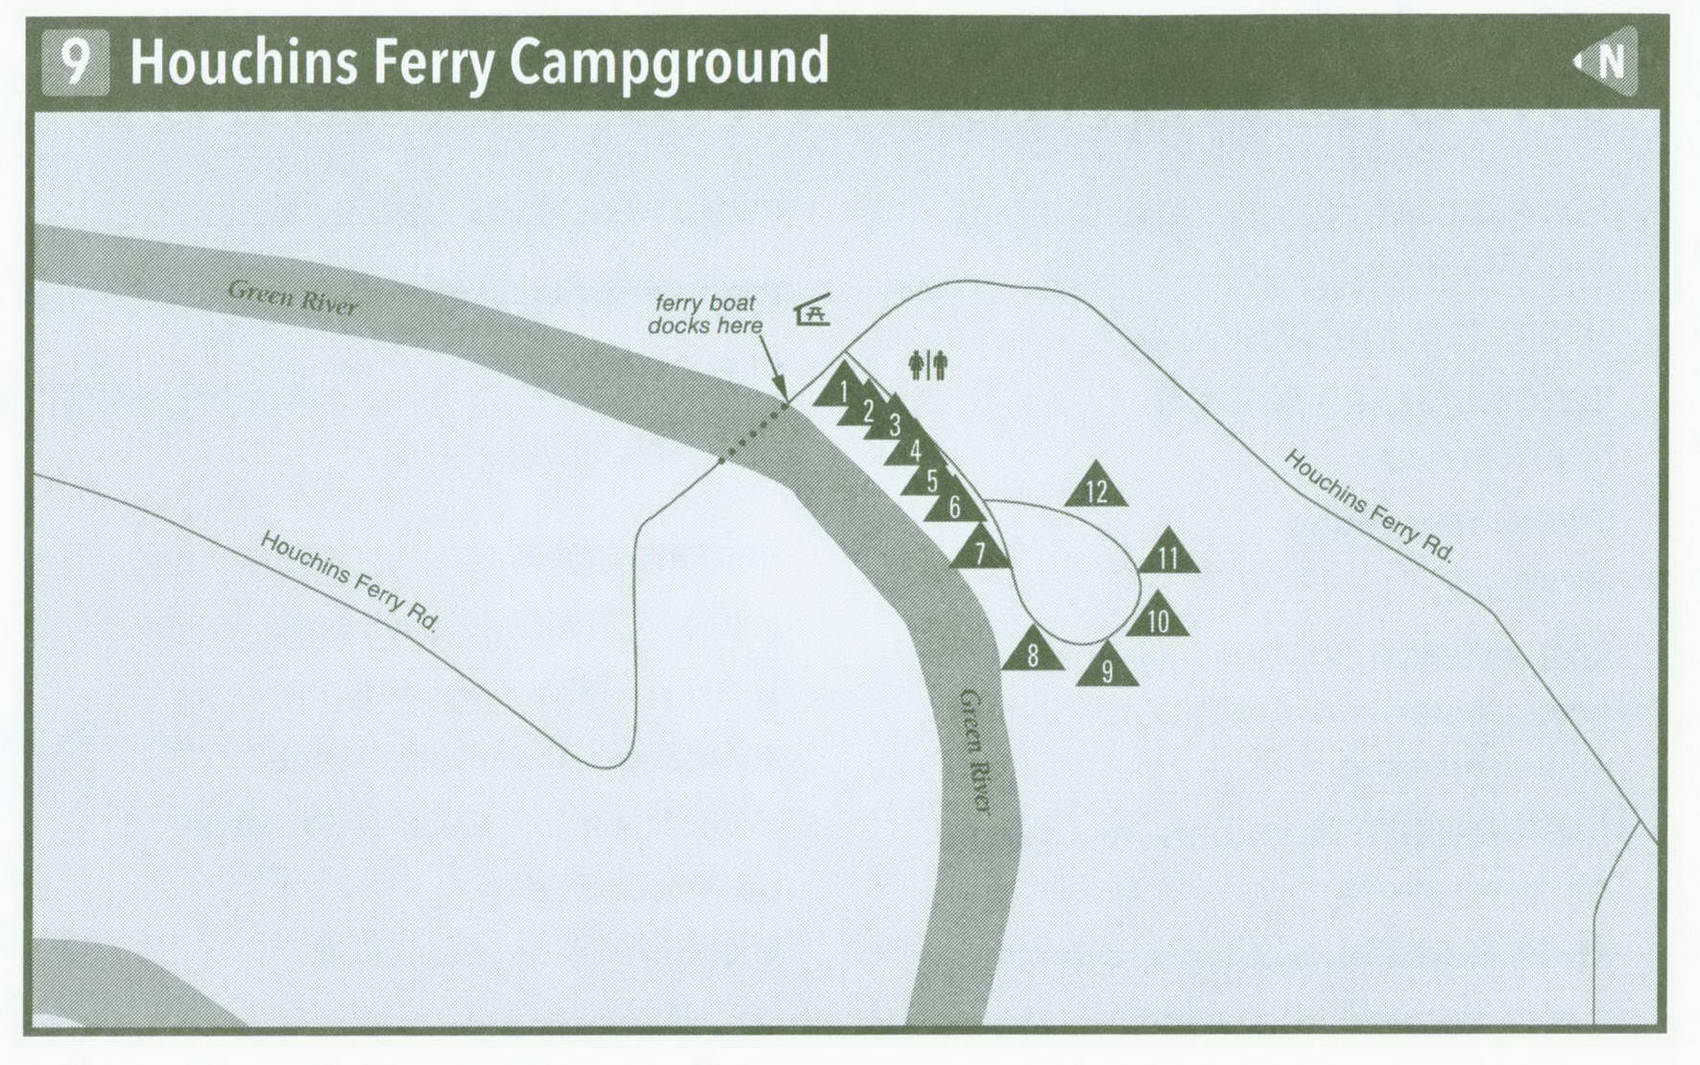 Plan of Houchins Ferry Campground